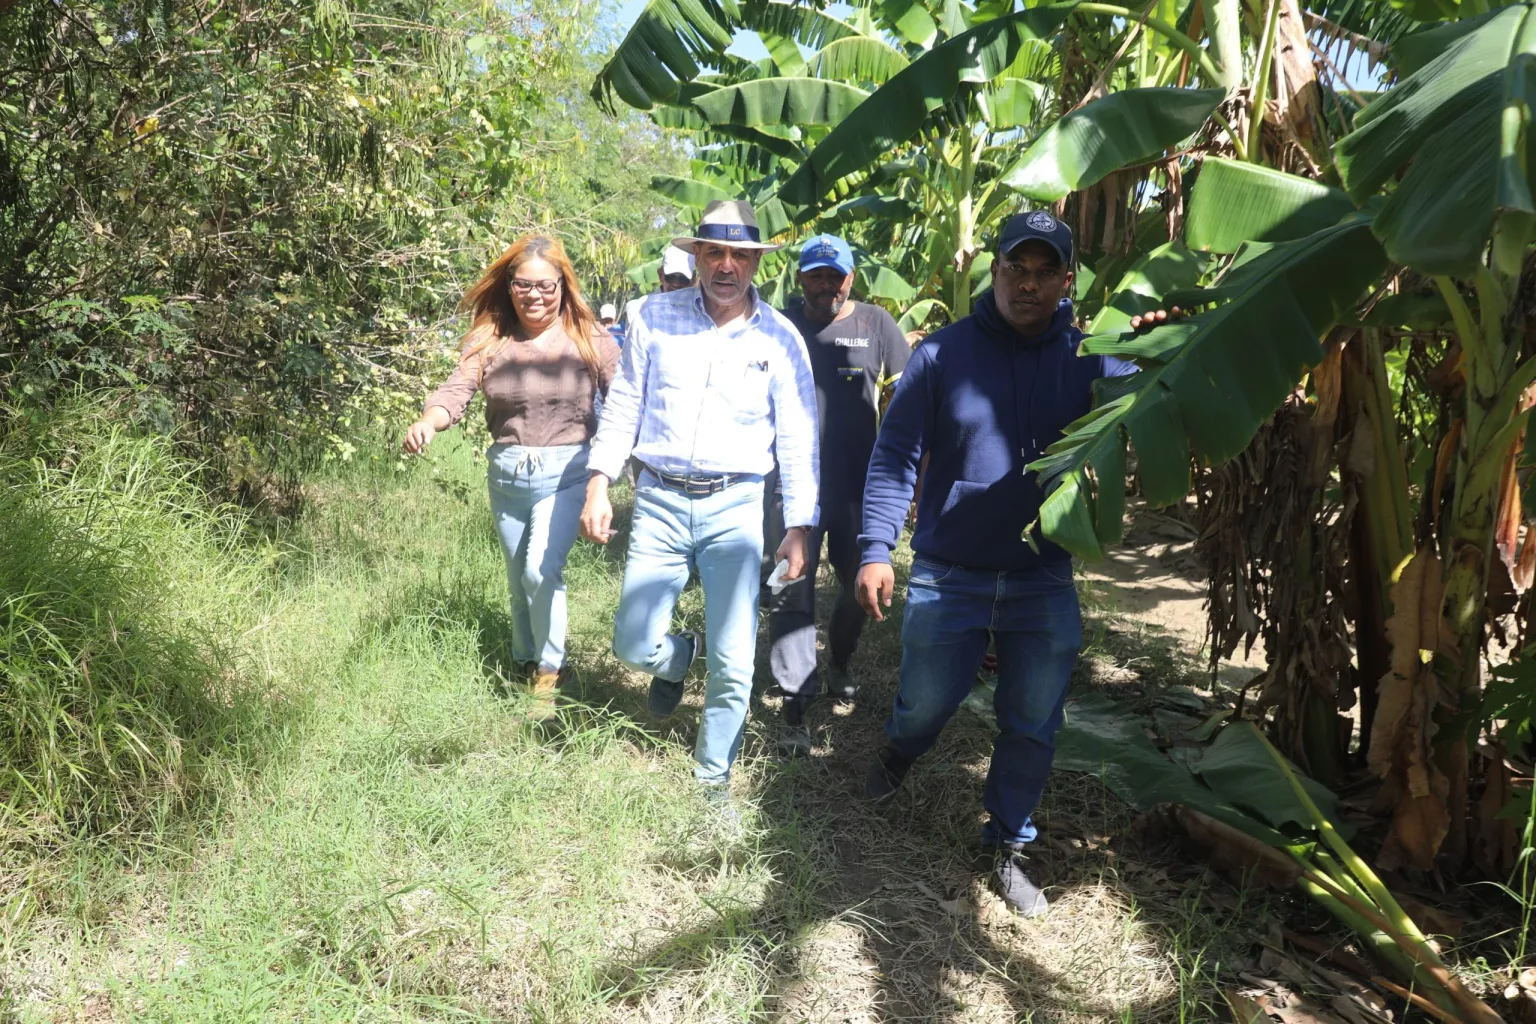 Agricultura revela esta ayudando a productores afectados en San Juan, Azua y Peravia